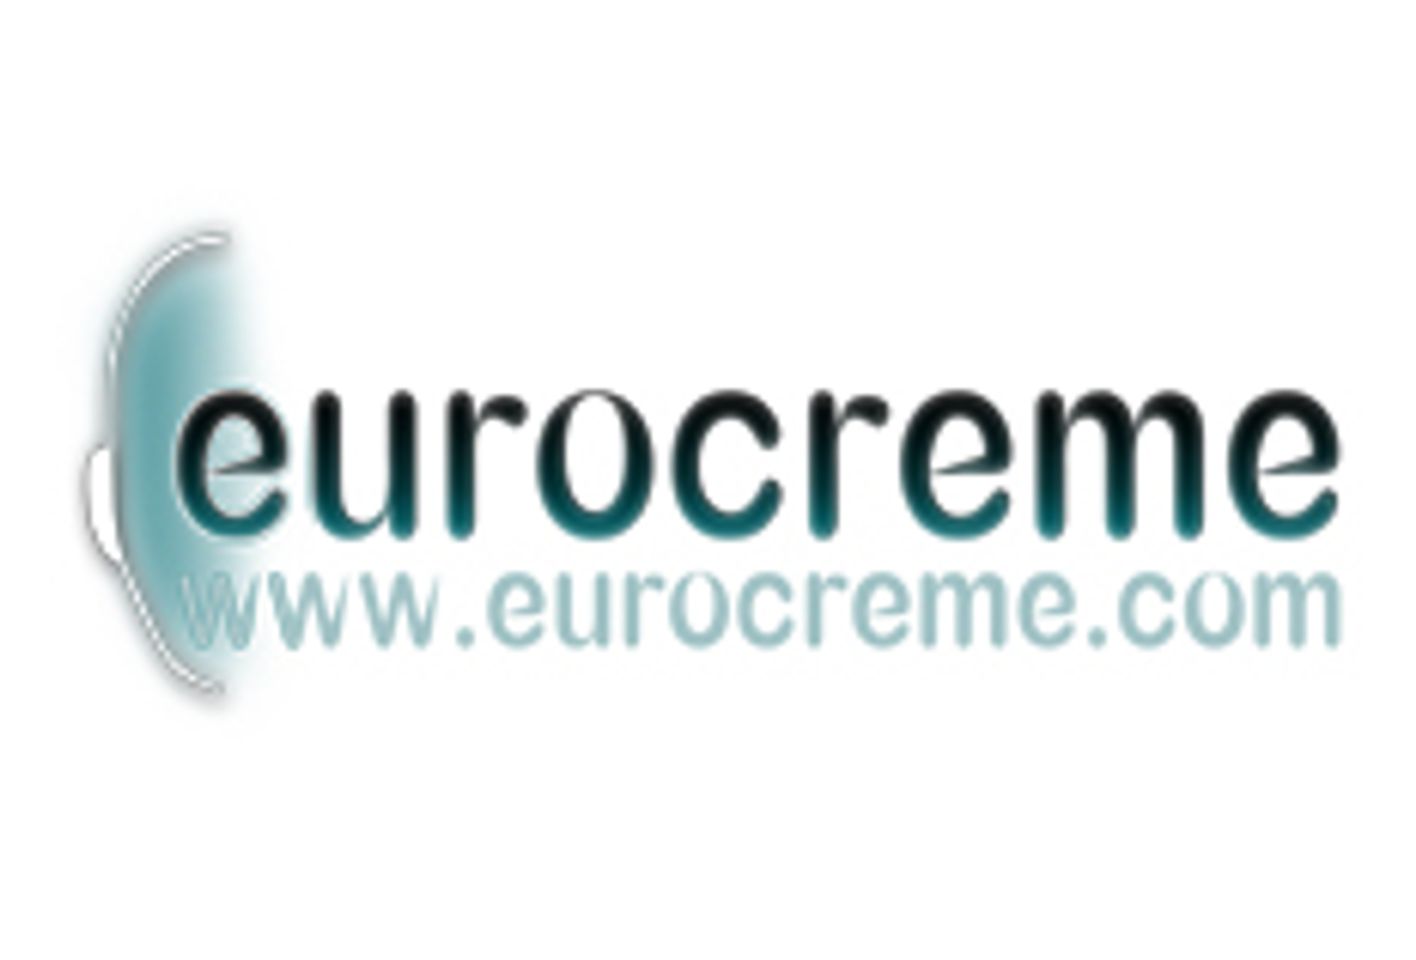 Eurocreme Starts 10th Year Celebrations with Desktop Calendar